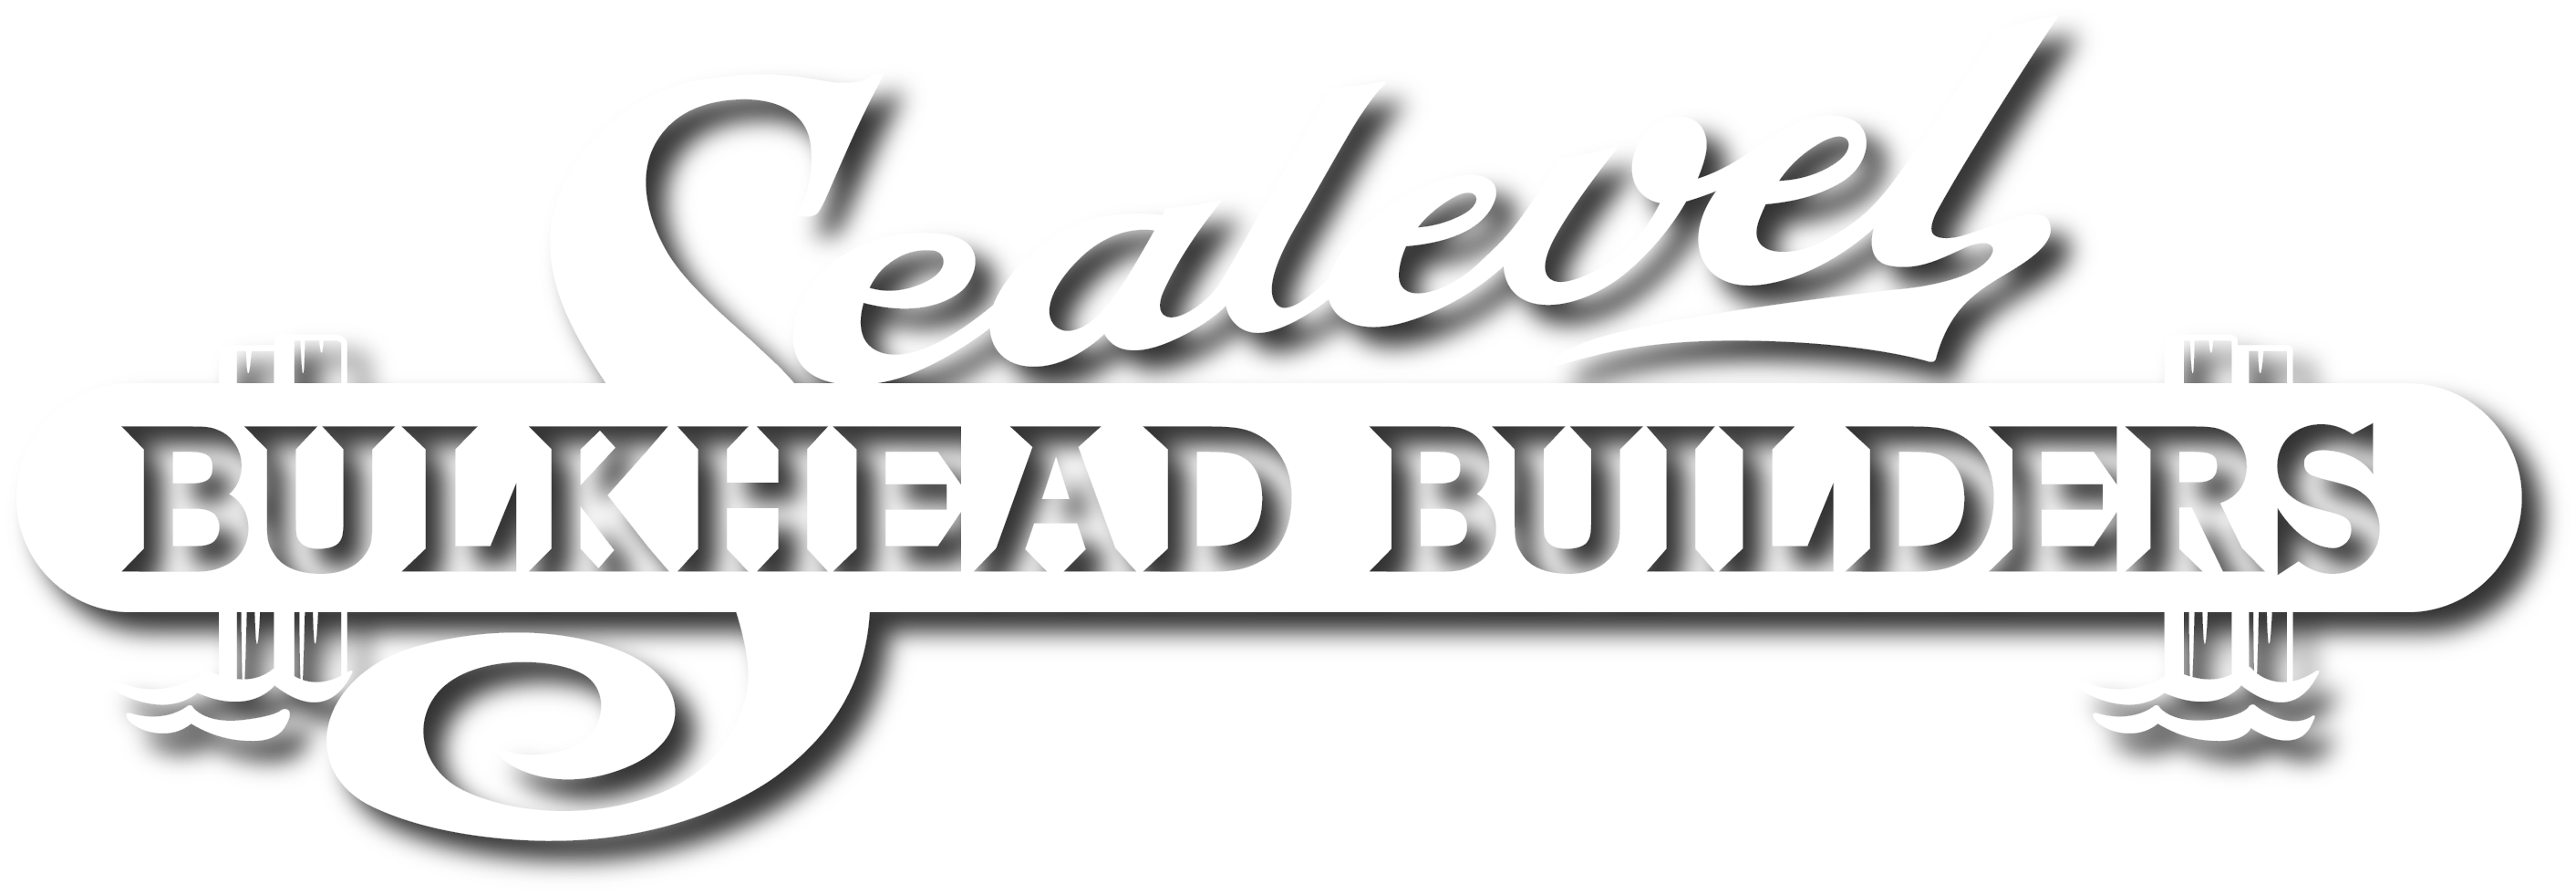 Sealevel Bulkhead Builders